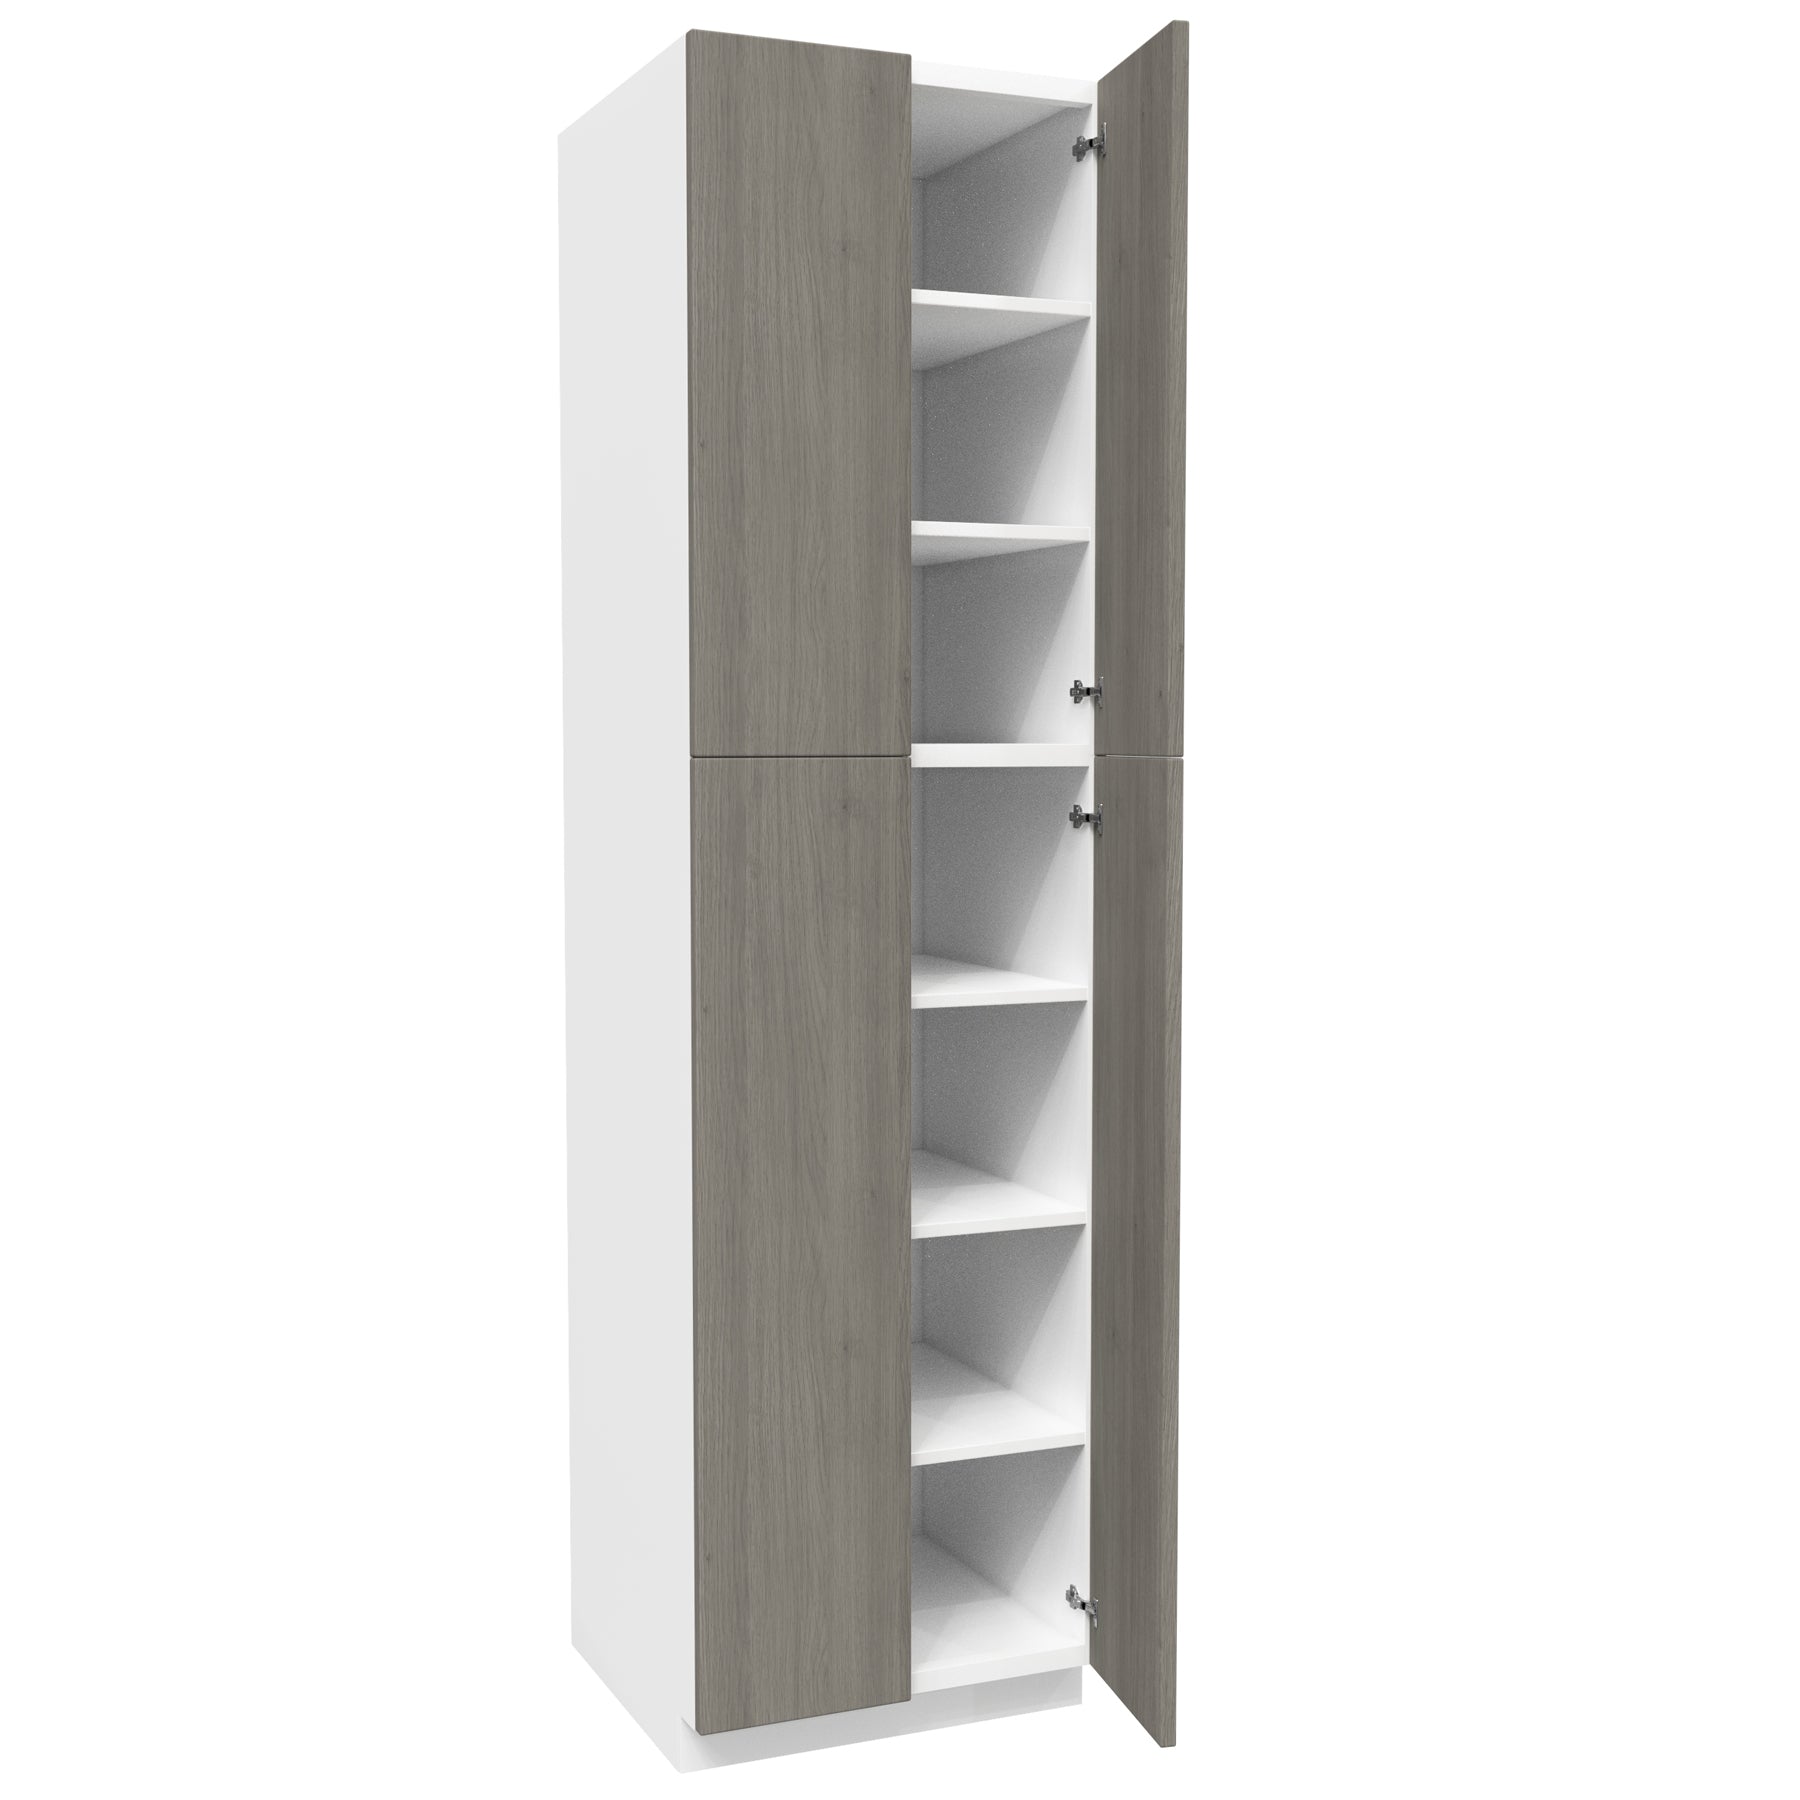 2 Door Utility Cabinet| Matrix Silver | 24W x 90H x 24D